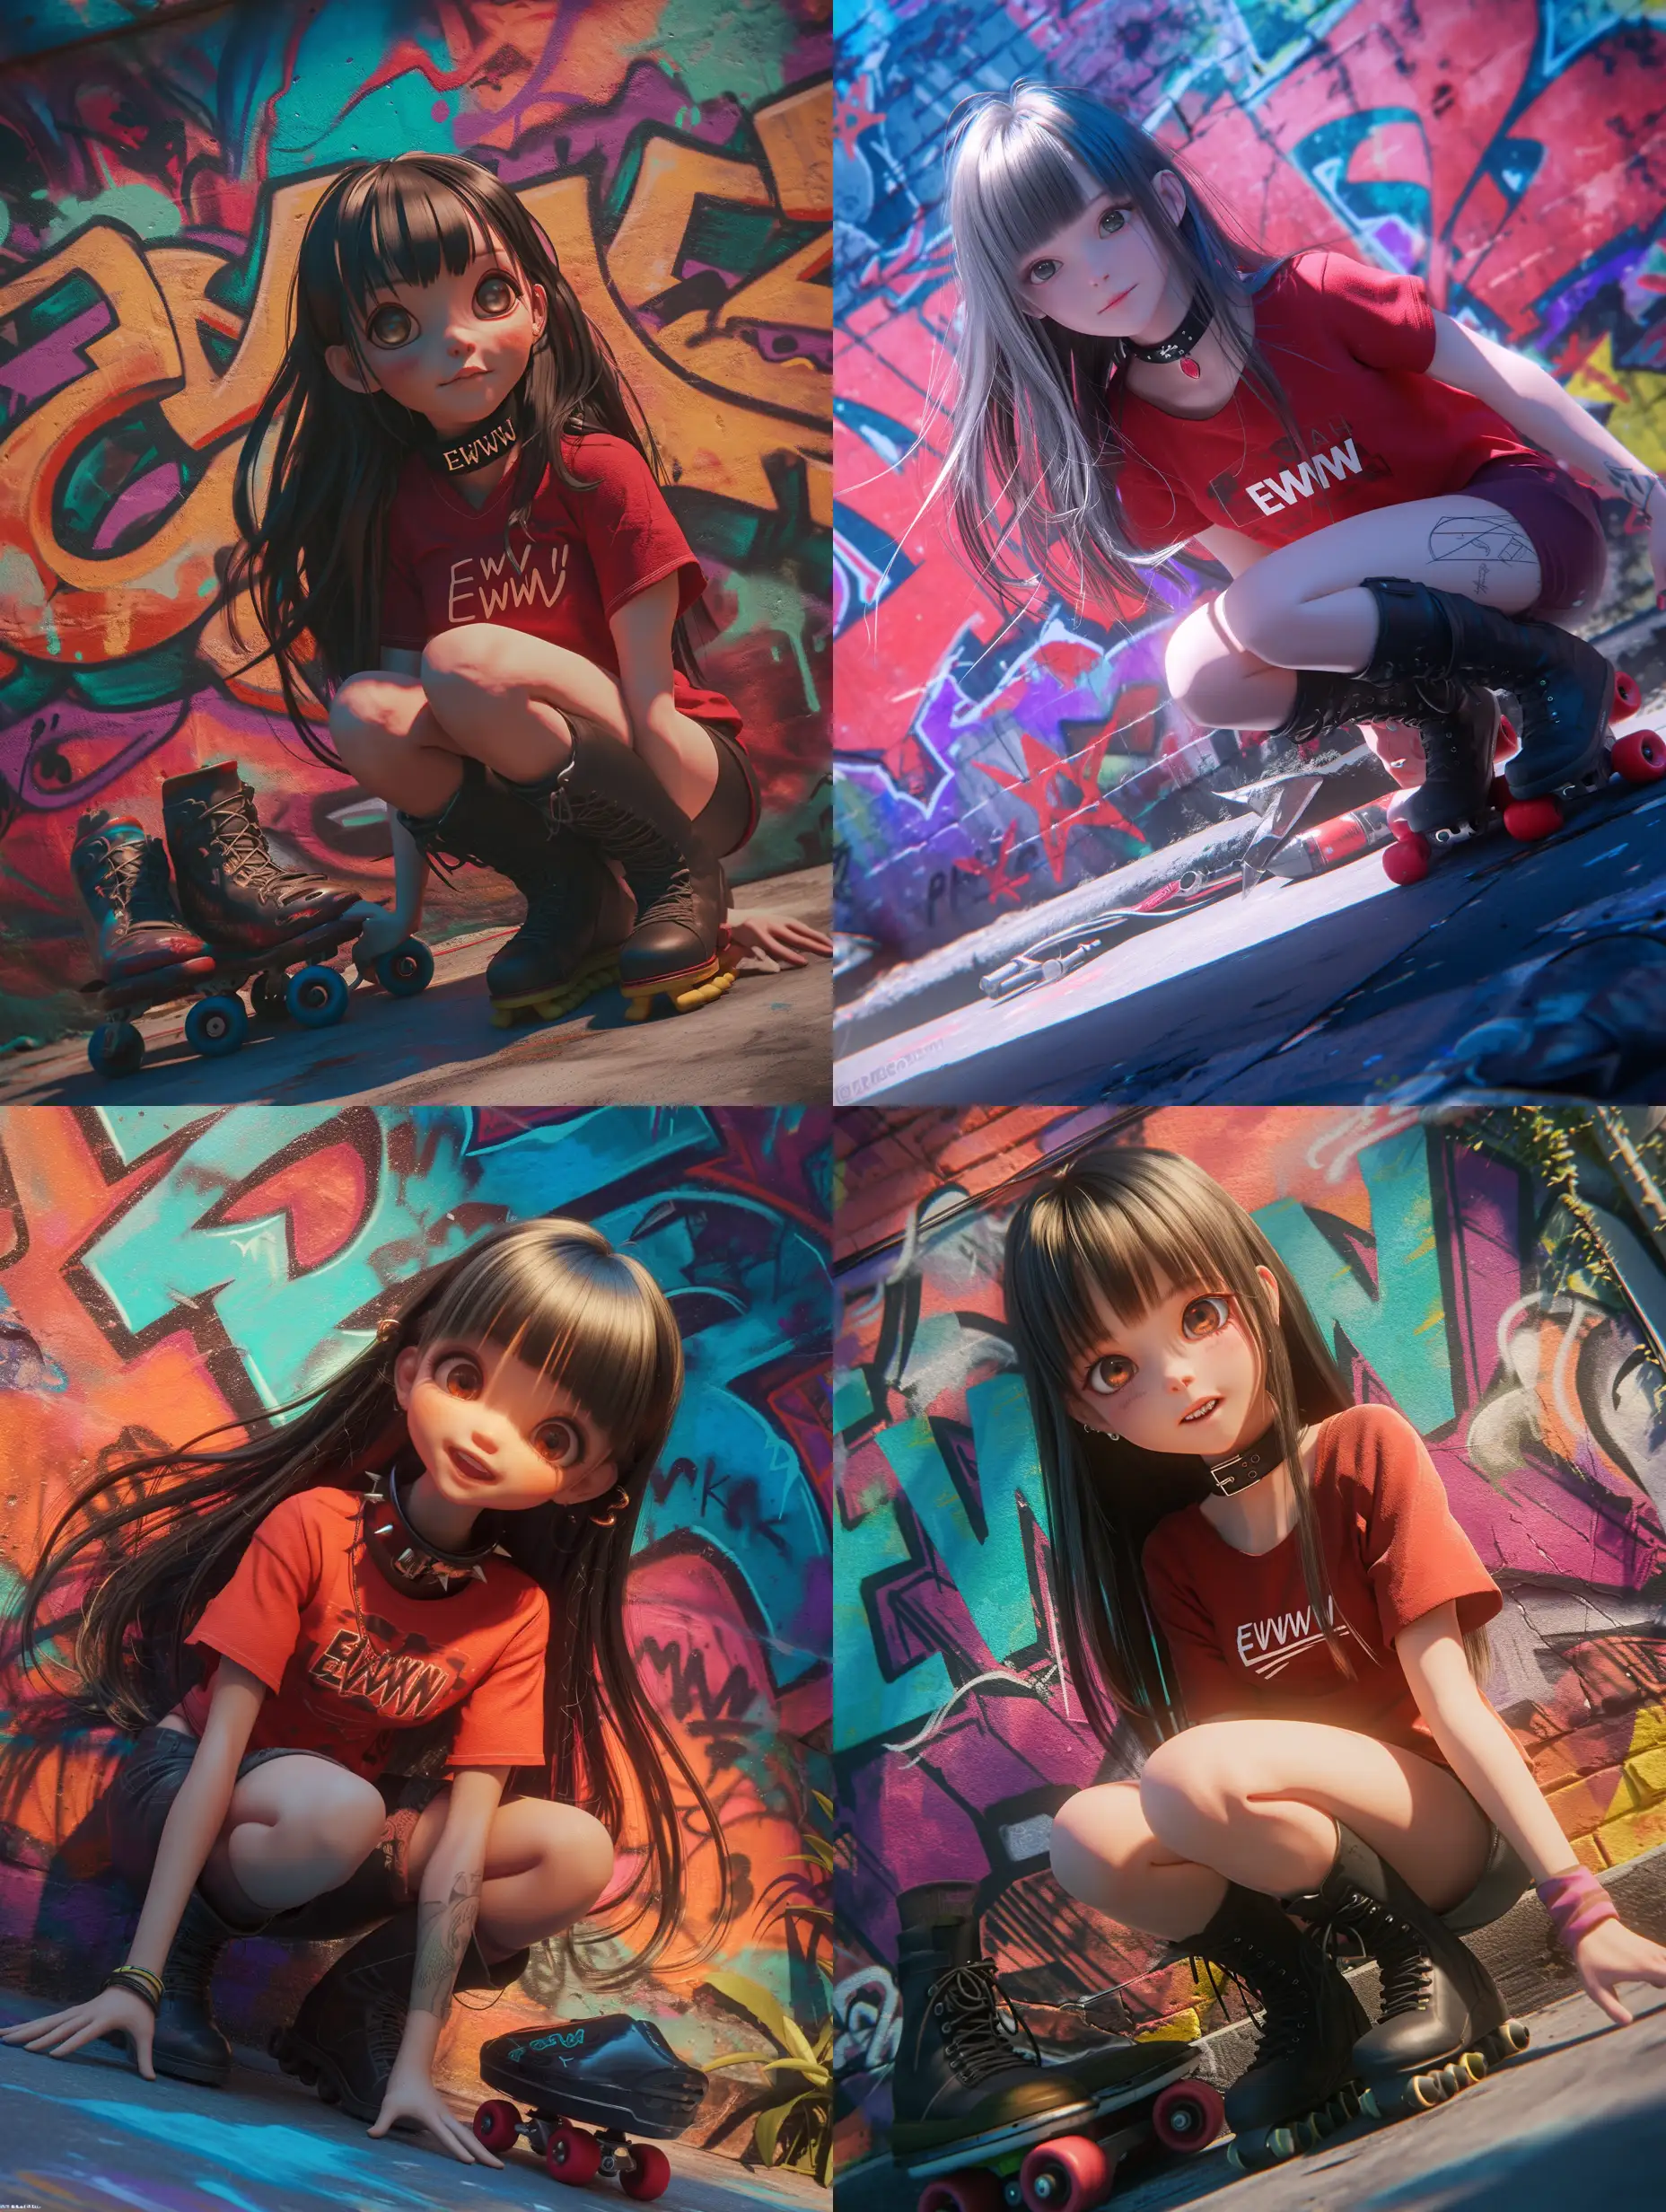 Cheeky-Anime-Girl-with-EWW-Collar-Next-to-Graffiti-Wall